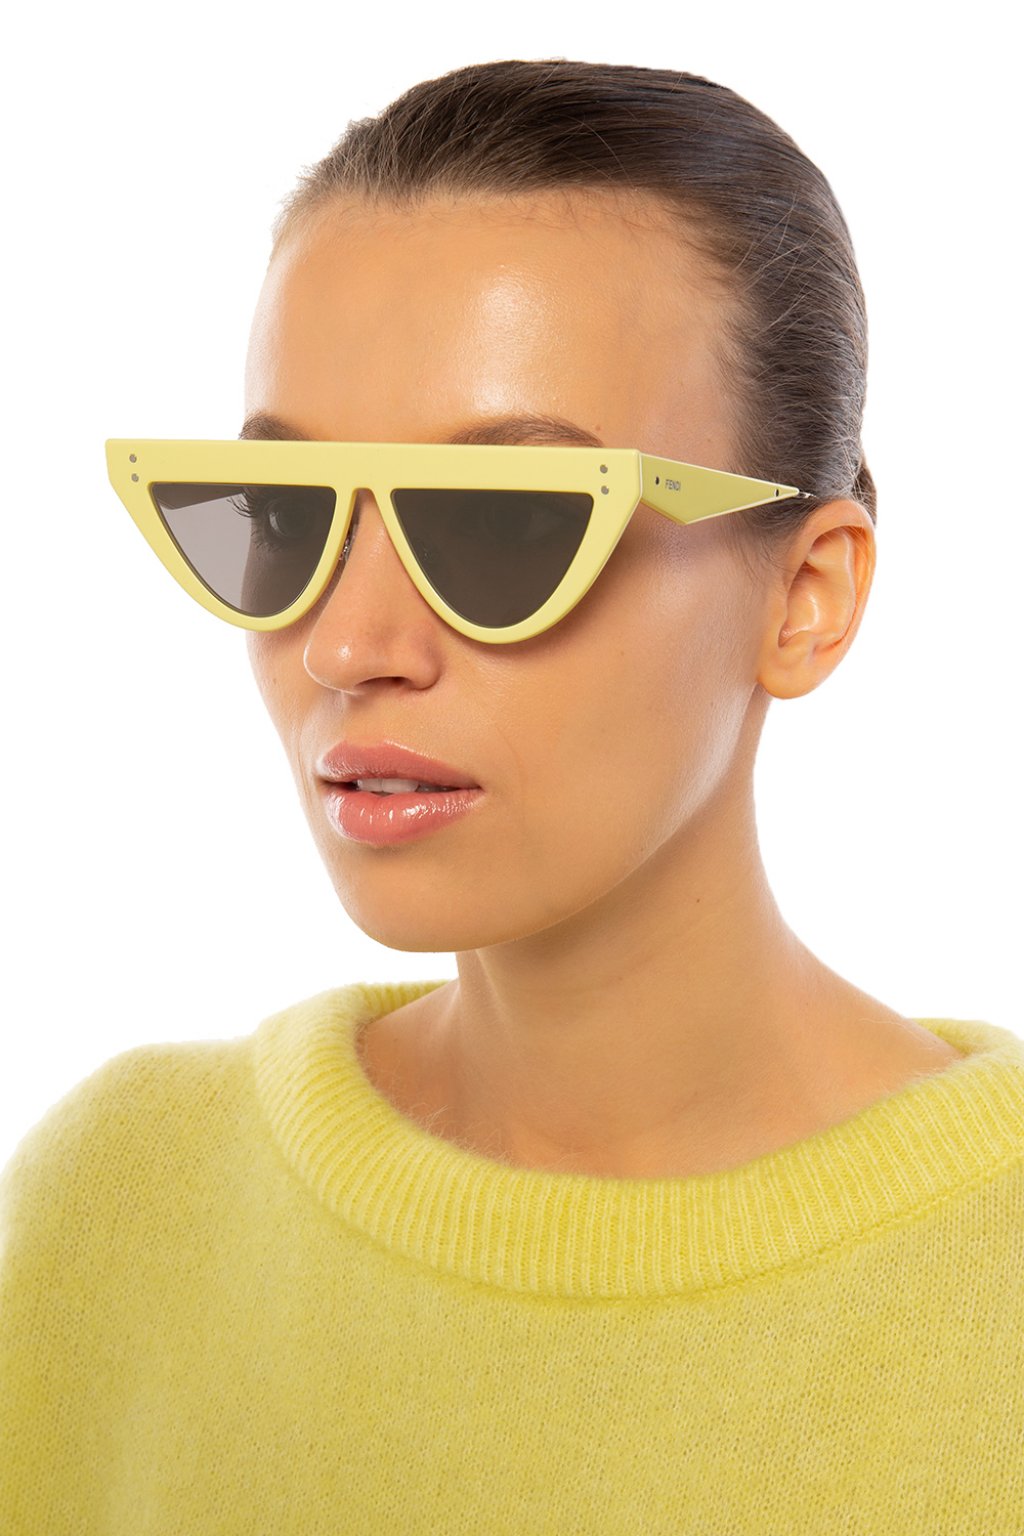 fendi sunglasses yellow